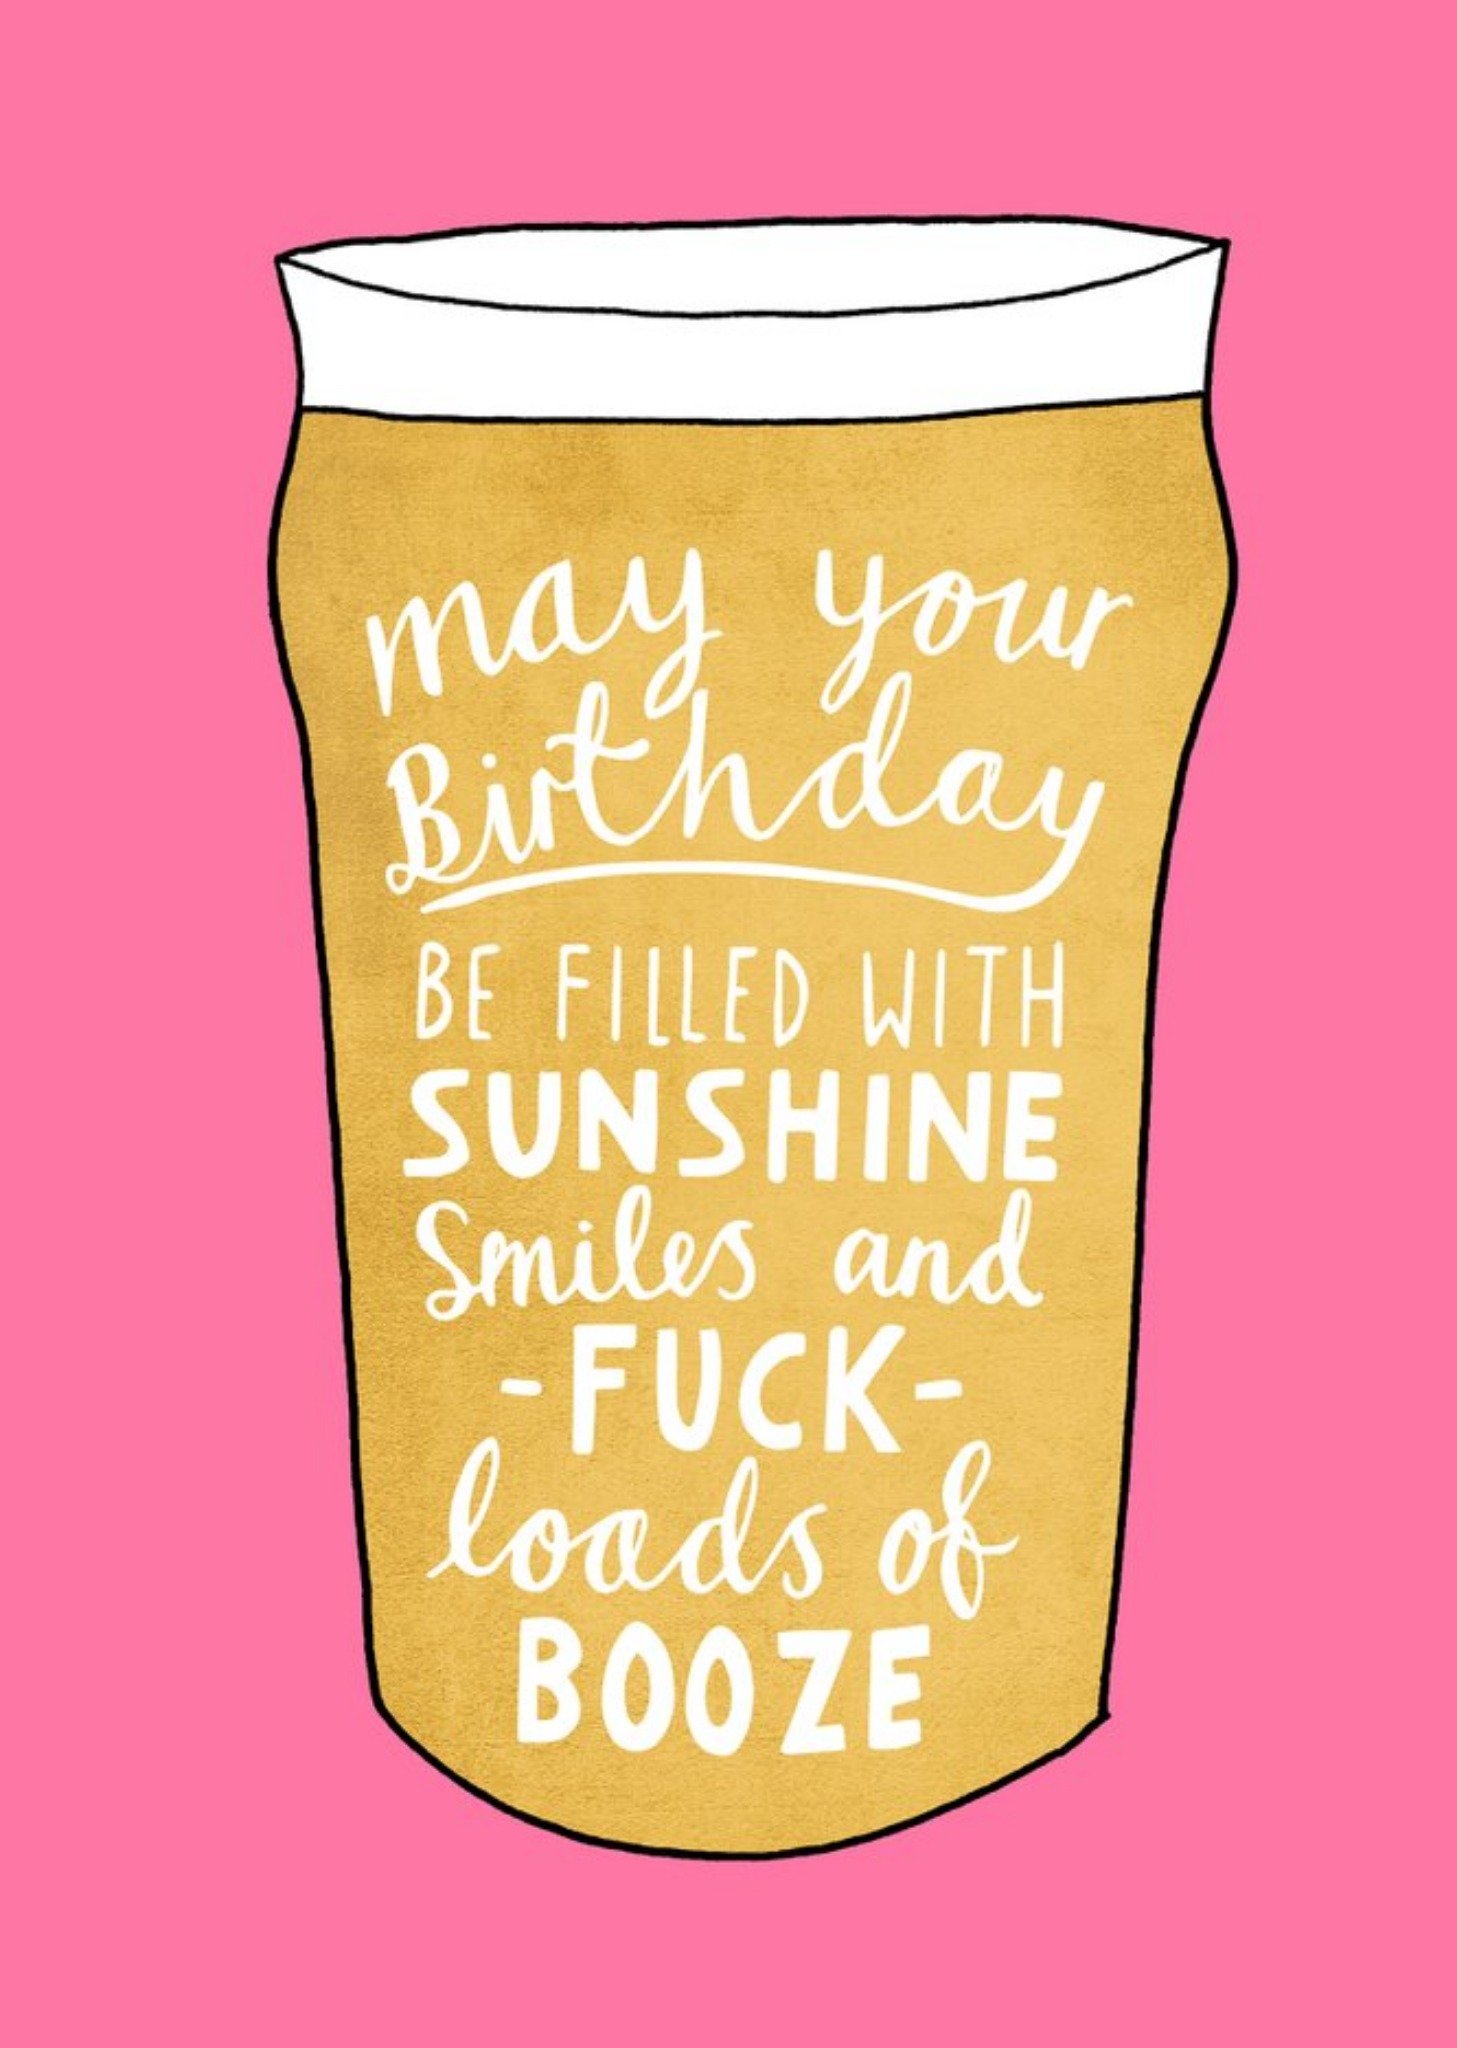 Moonpig Funny Fuck Loads Of Booze Beer Birthday Card, Large